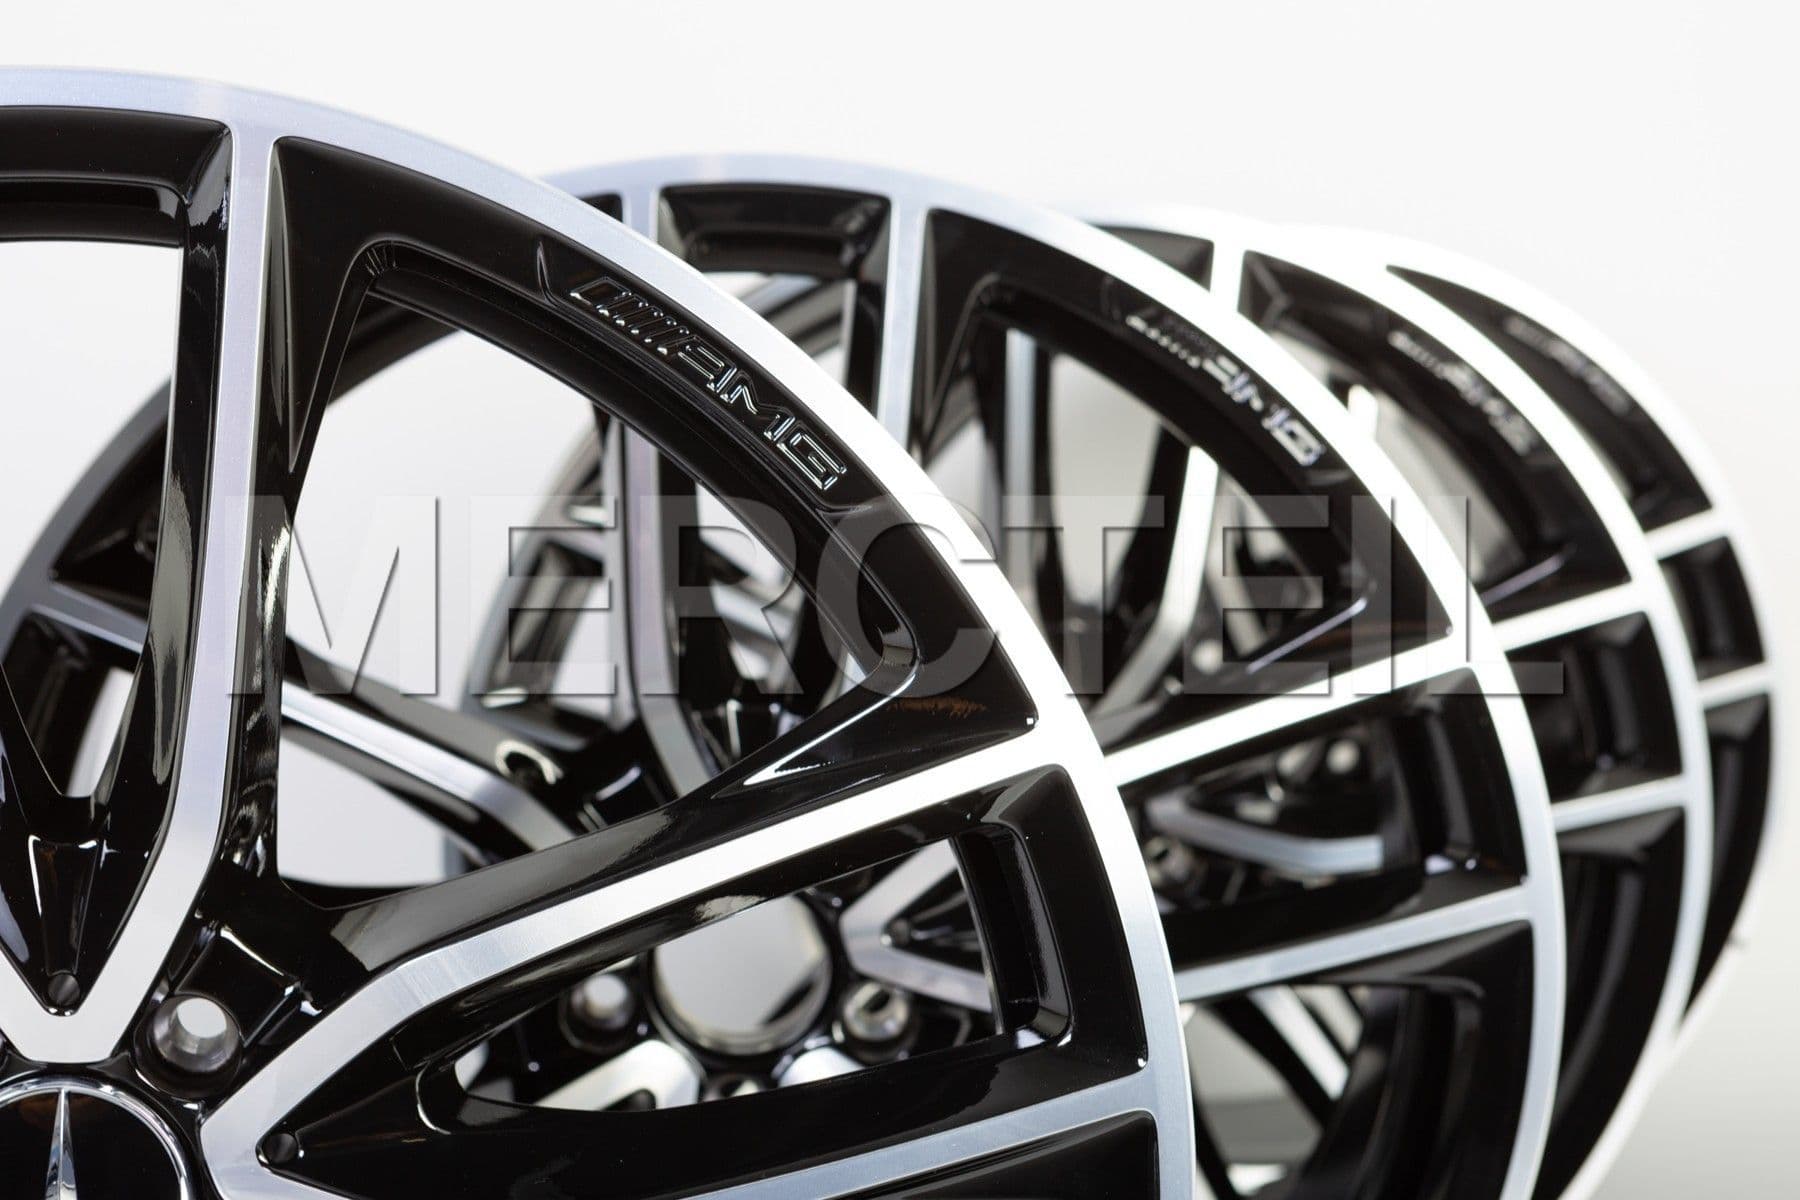 Mercedes GLS 23-inch wheels Genuine Mercedes AMG (part number: A16740177007X23)